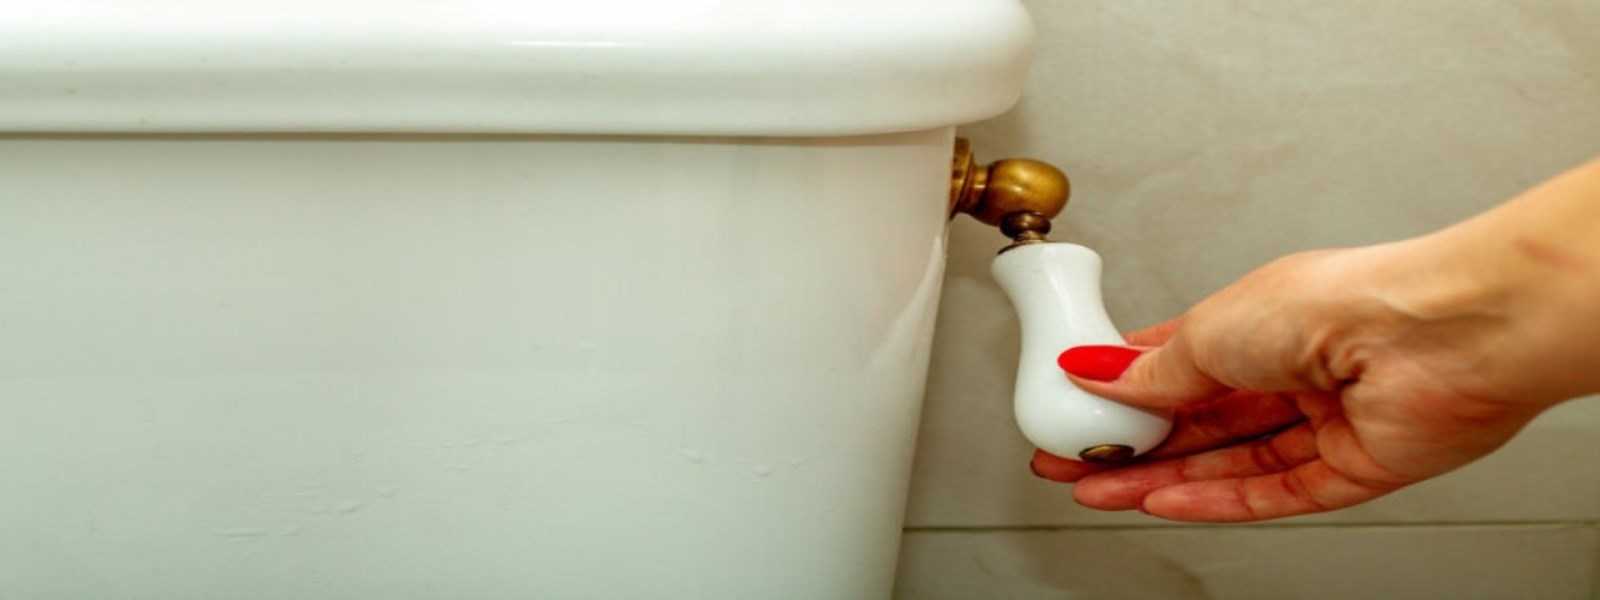 Flushing Toilet Image 